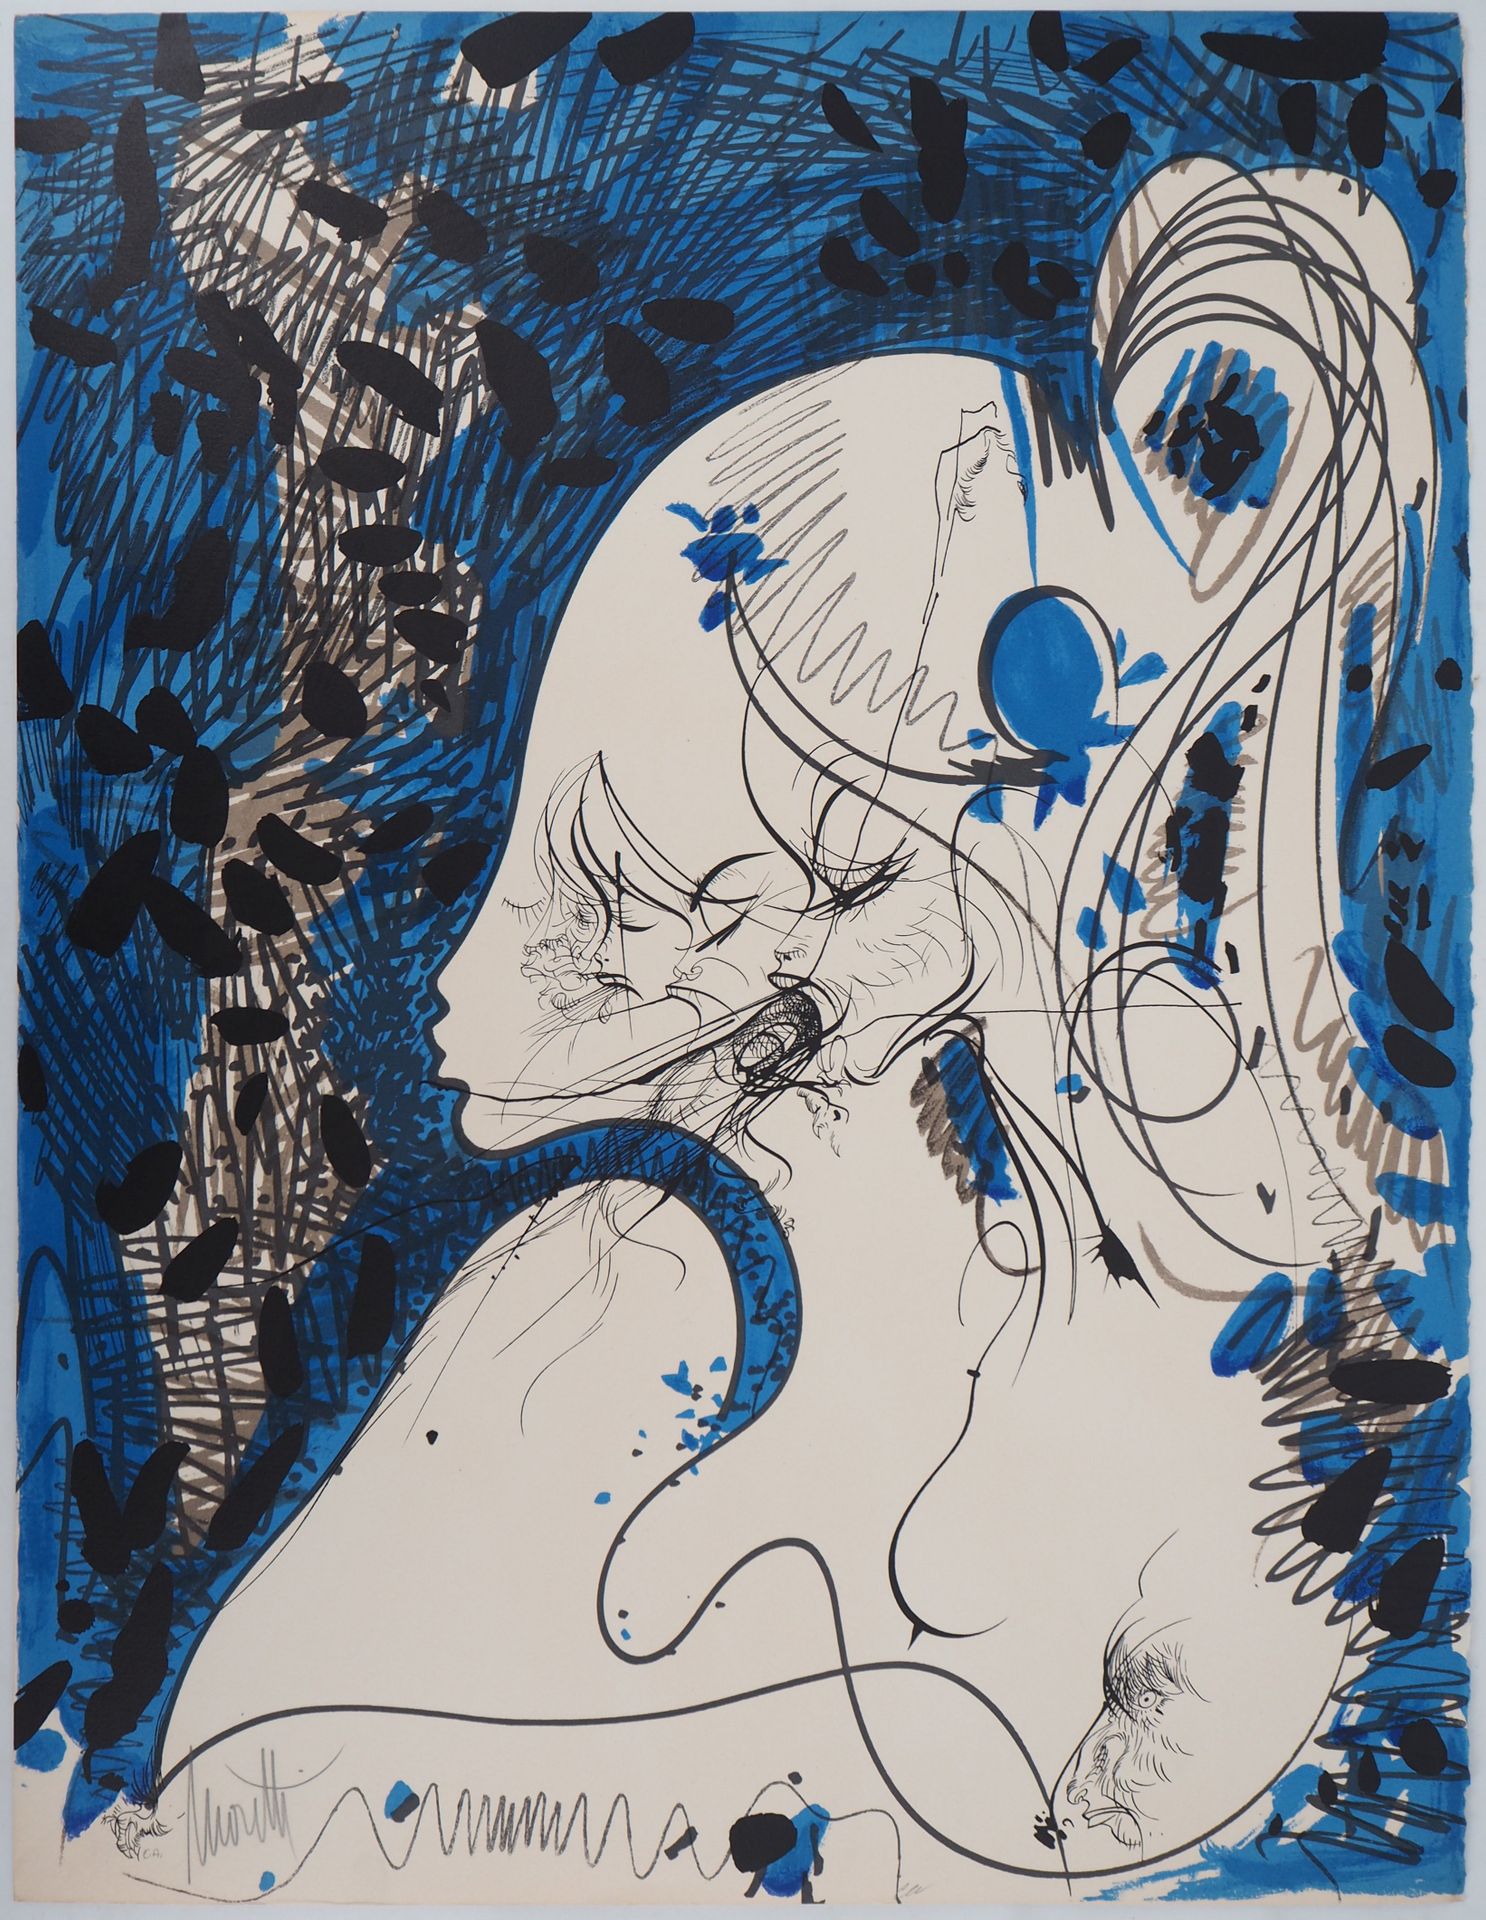 Raymond MORETTI 雷蒙德-莫雷蒂 (1931 - 2005)

禁忌的情感, 1974



牛皮纸上的原始石版画

左下方有铅笔签名

编号为3&hellip;